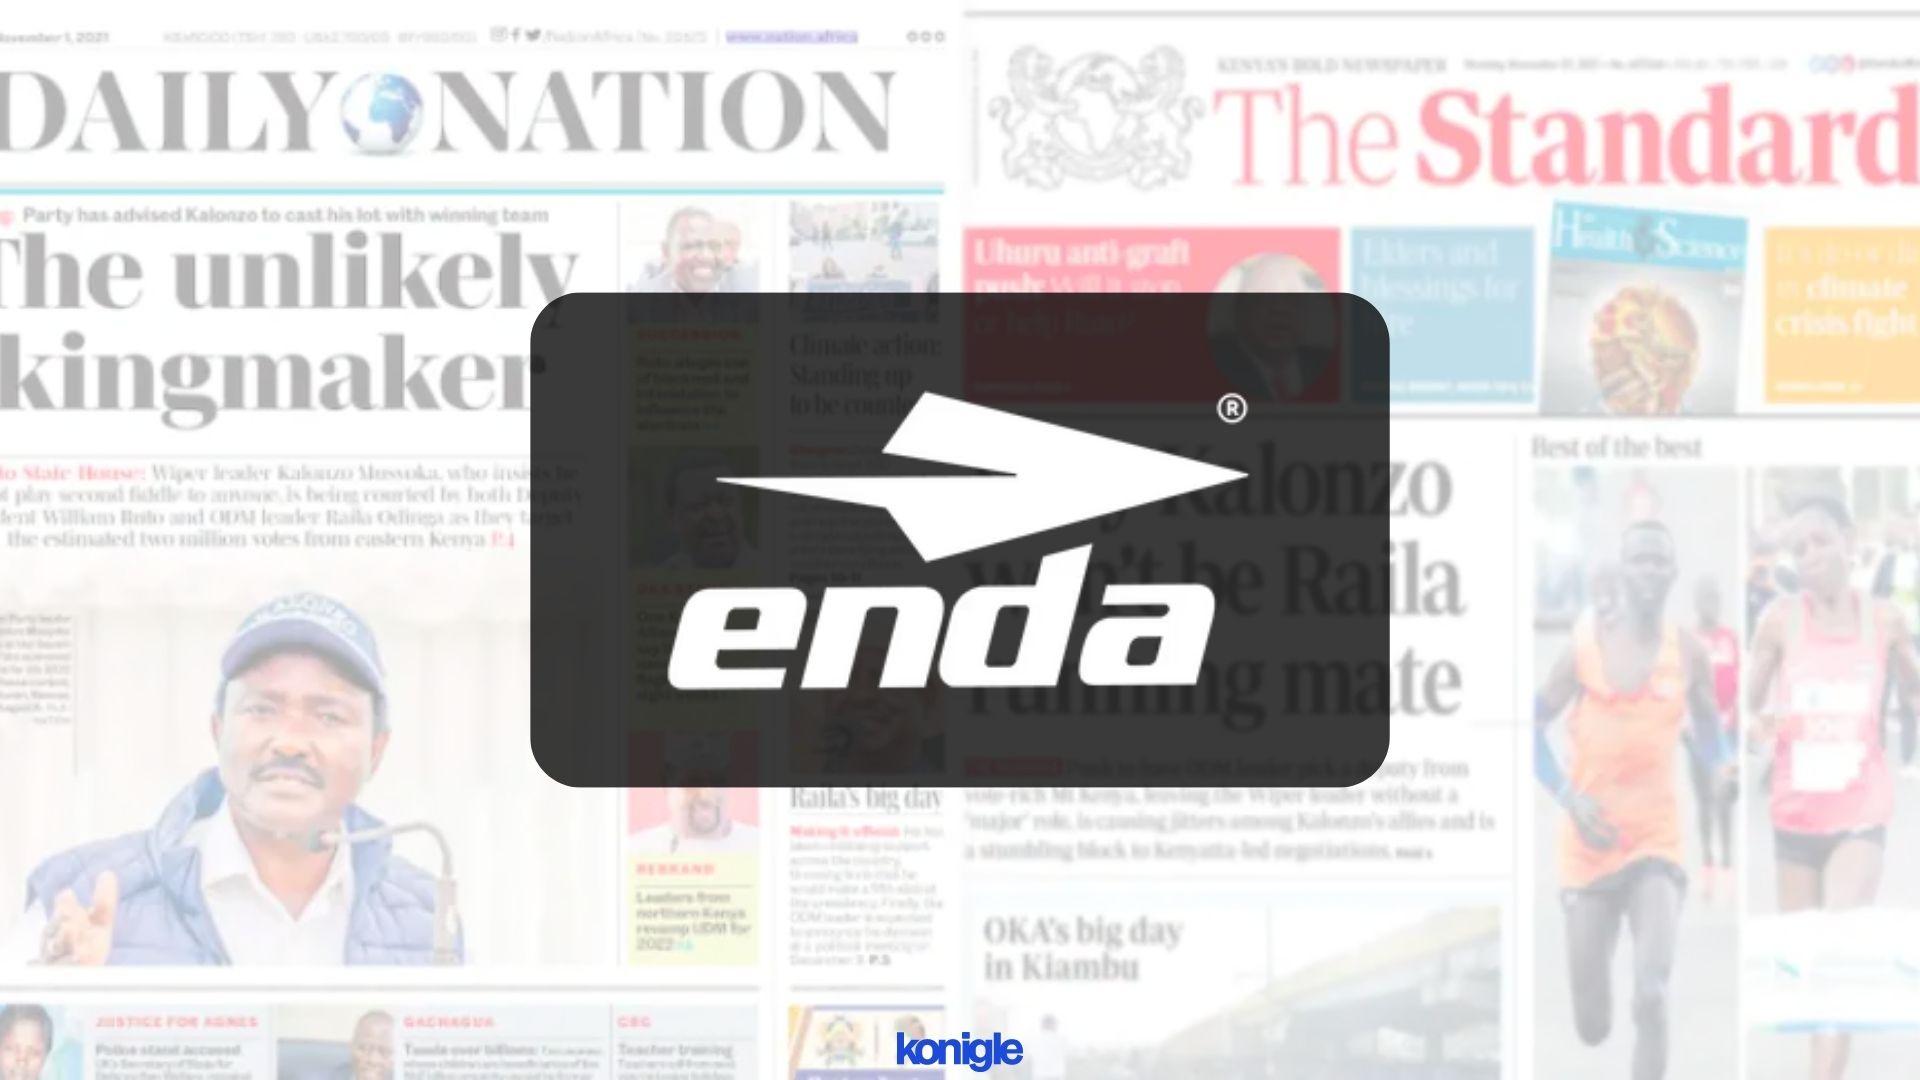 Enda Athletic’s authentic branding